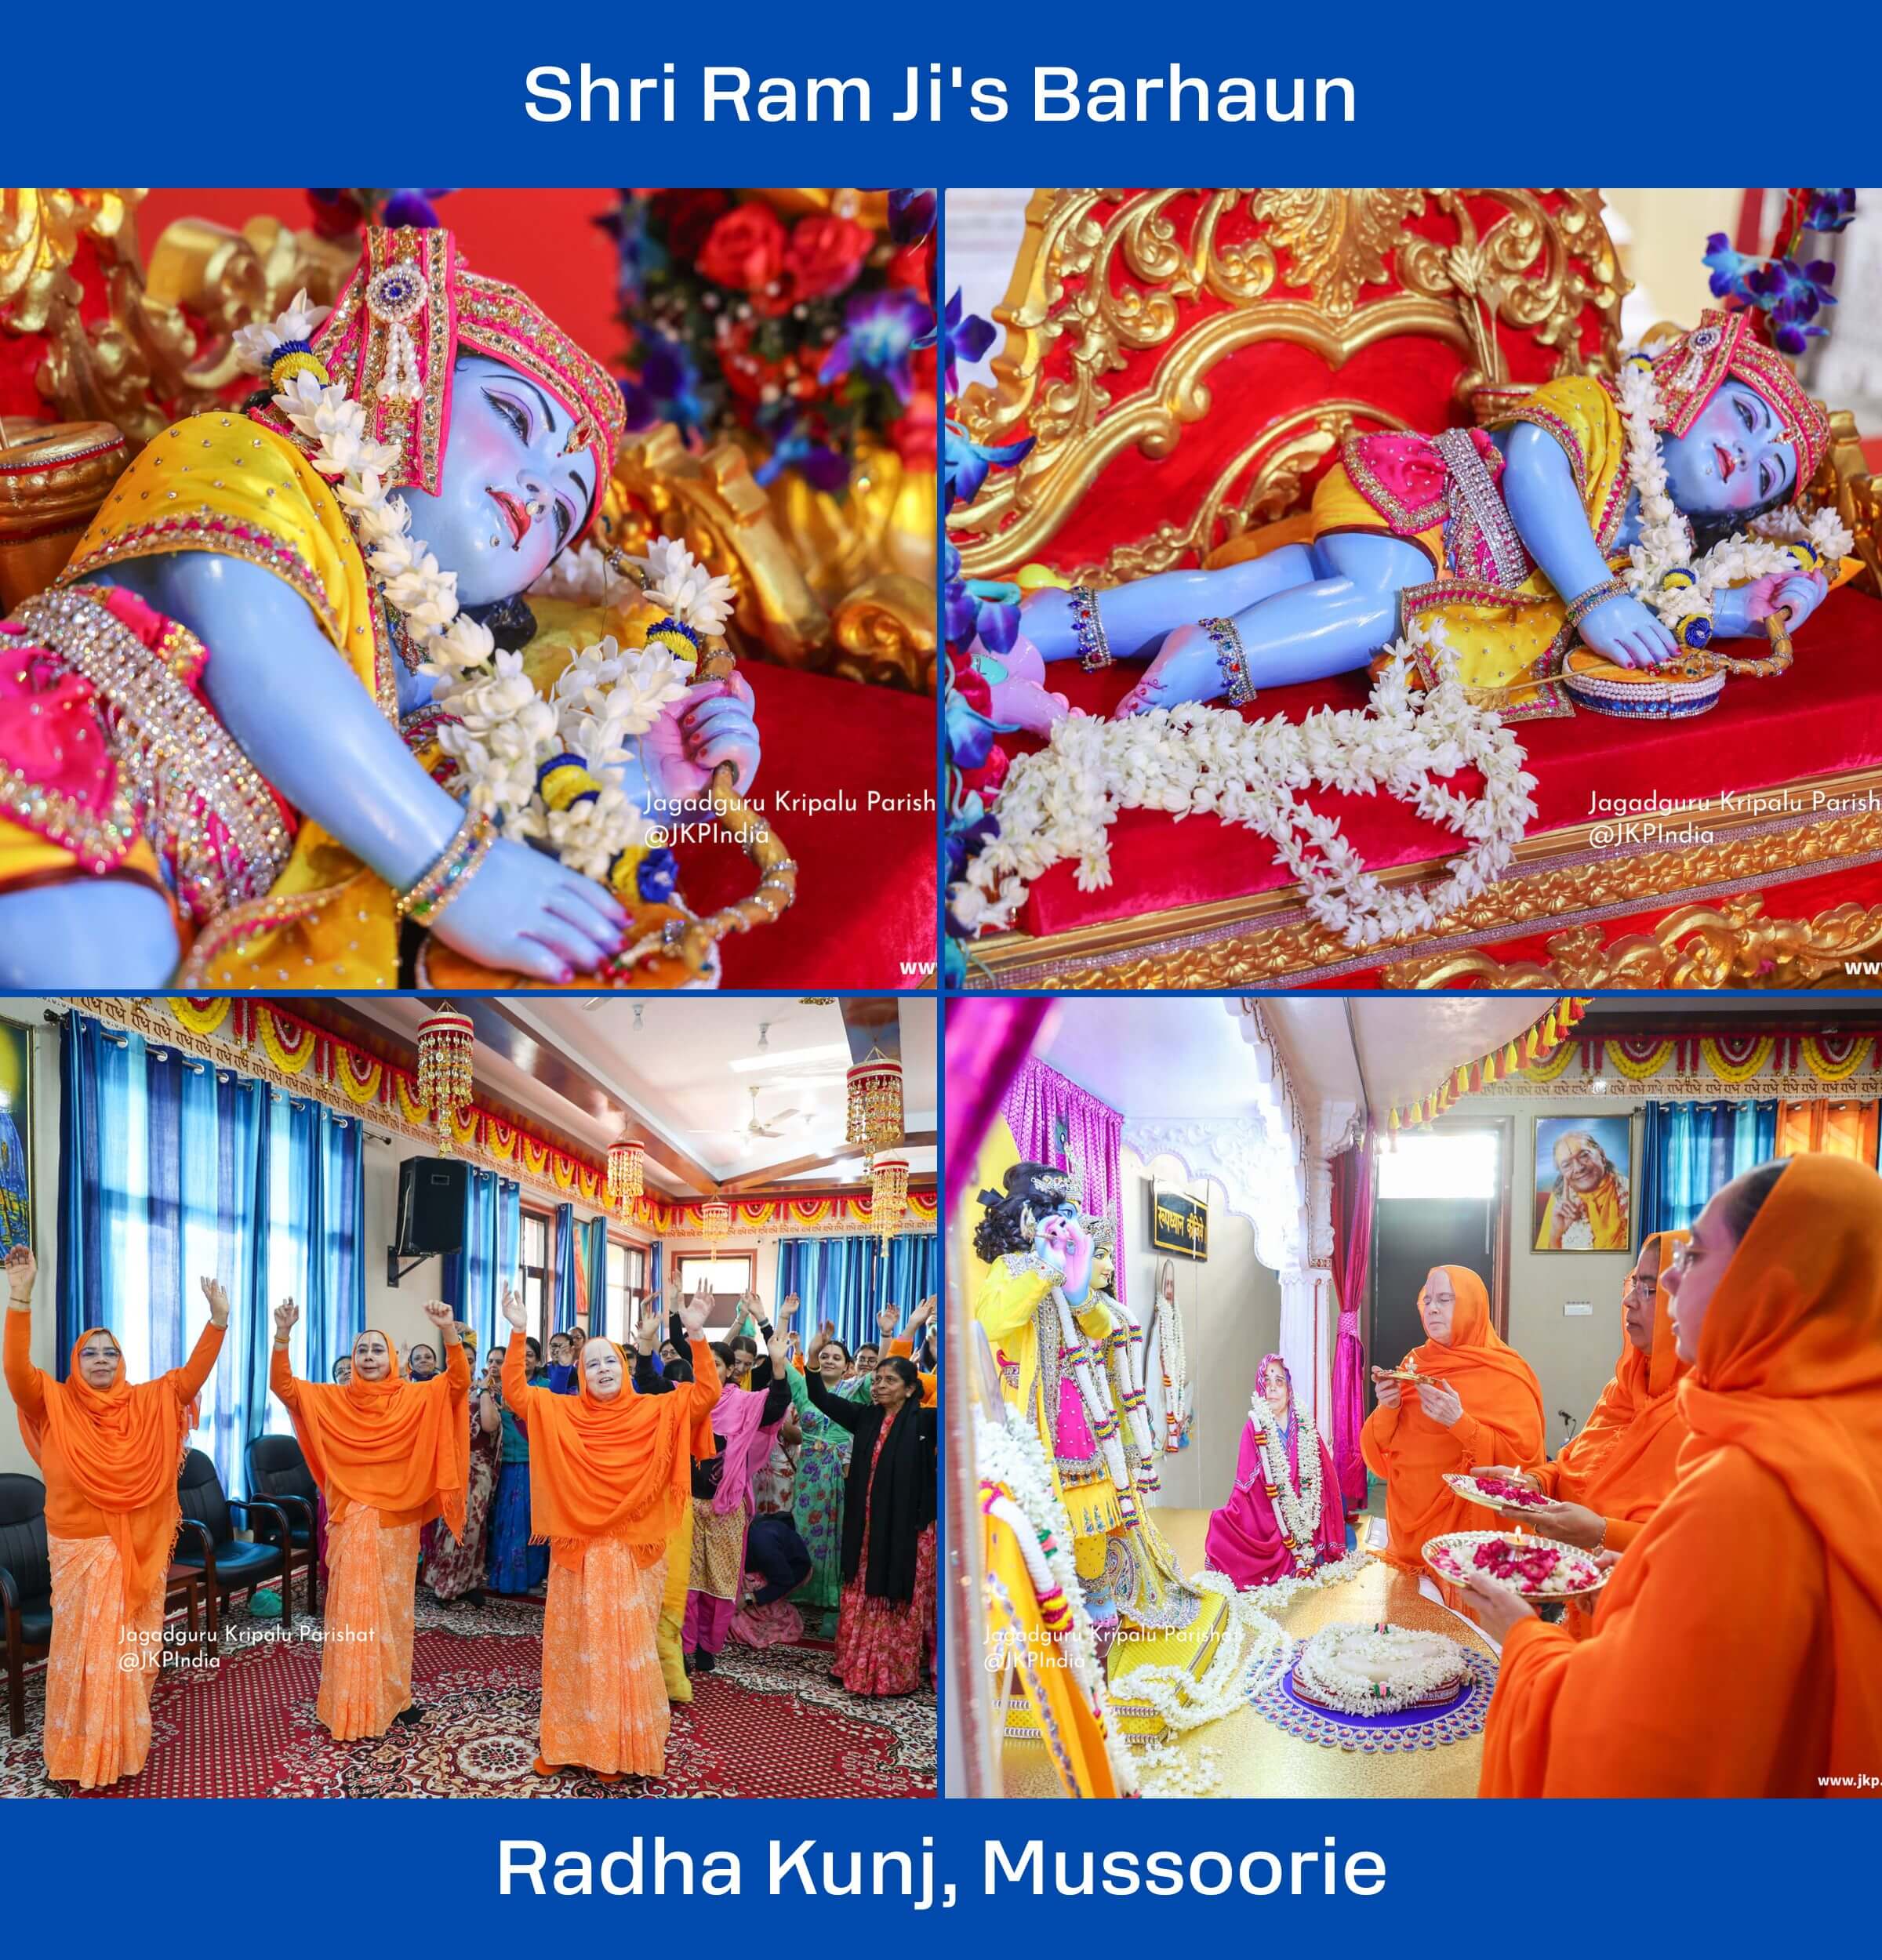 Jagadguru Kripalu Parishat, Jagadguru Shri Kripalu Ji Maharaj, Radha Krishna, Mussoorie, Shri Ram